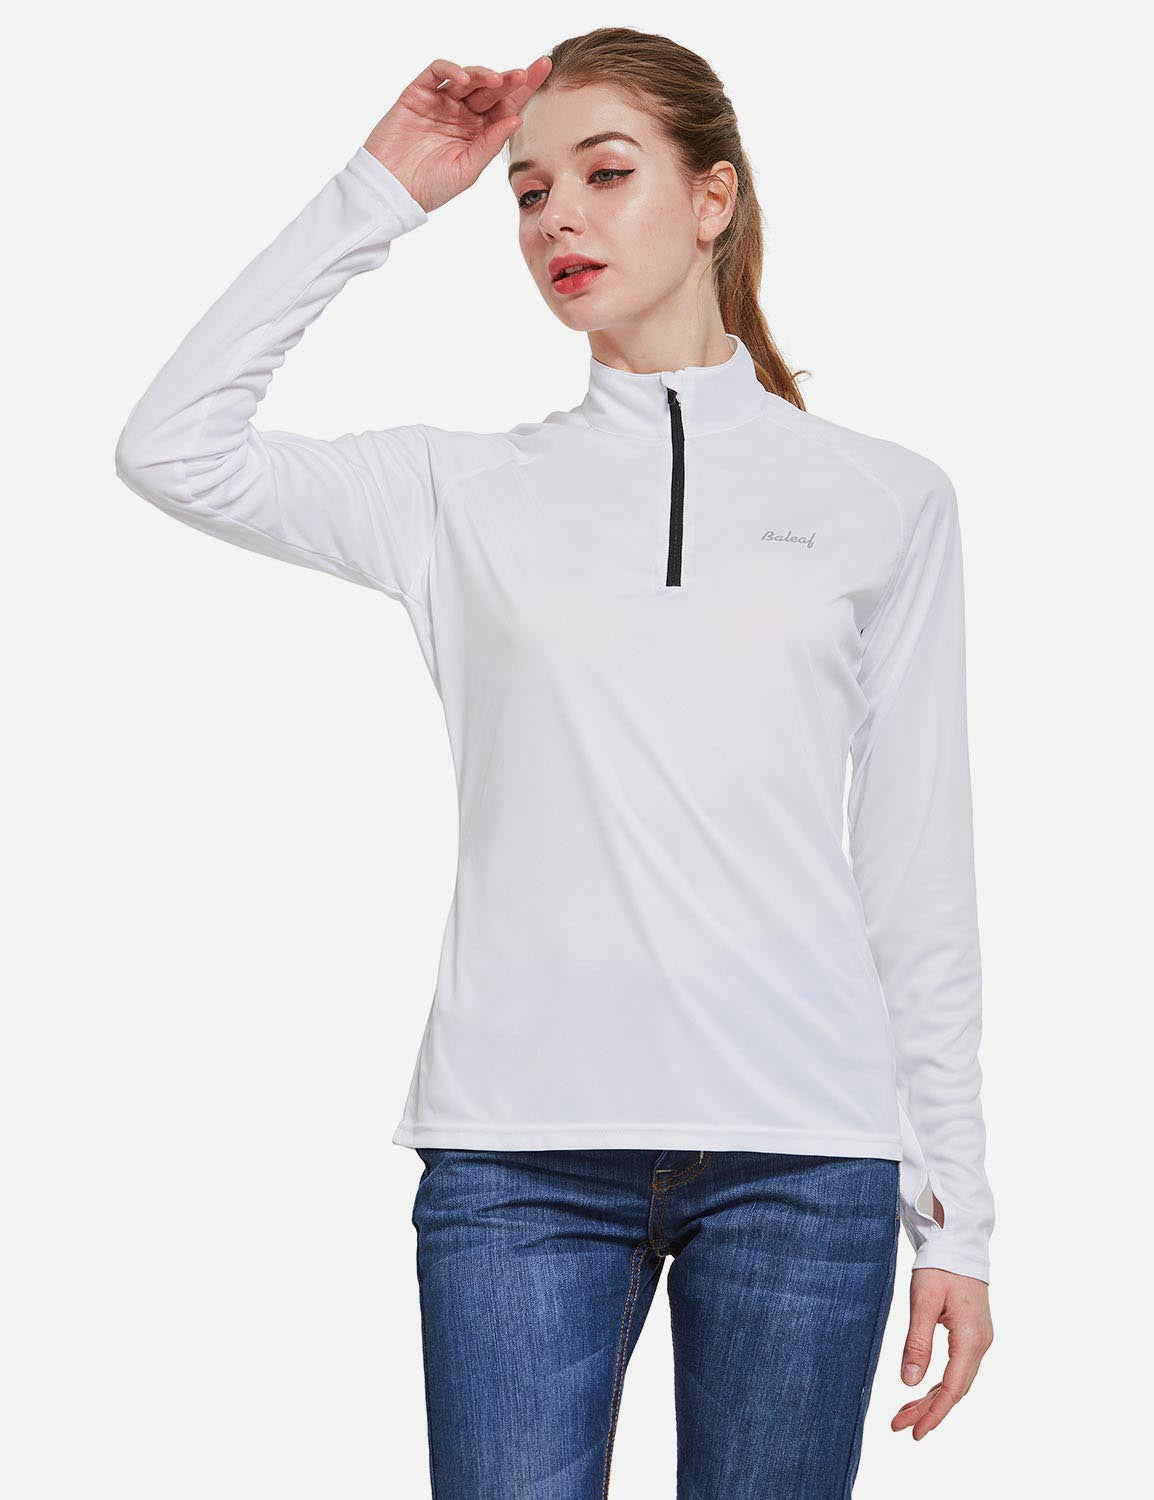 Baleaf Women's UP50+ Collared Long Sleeved Tshirt w Thumbholes aga065 White Side